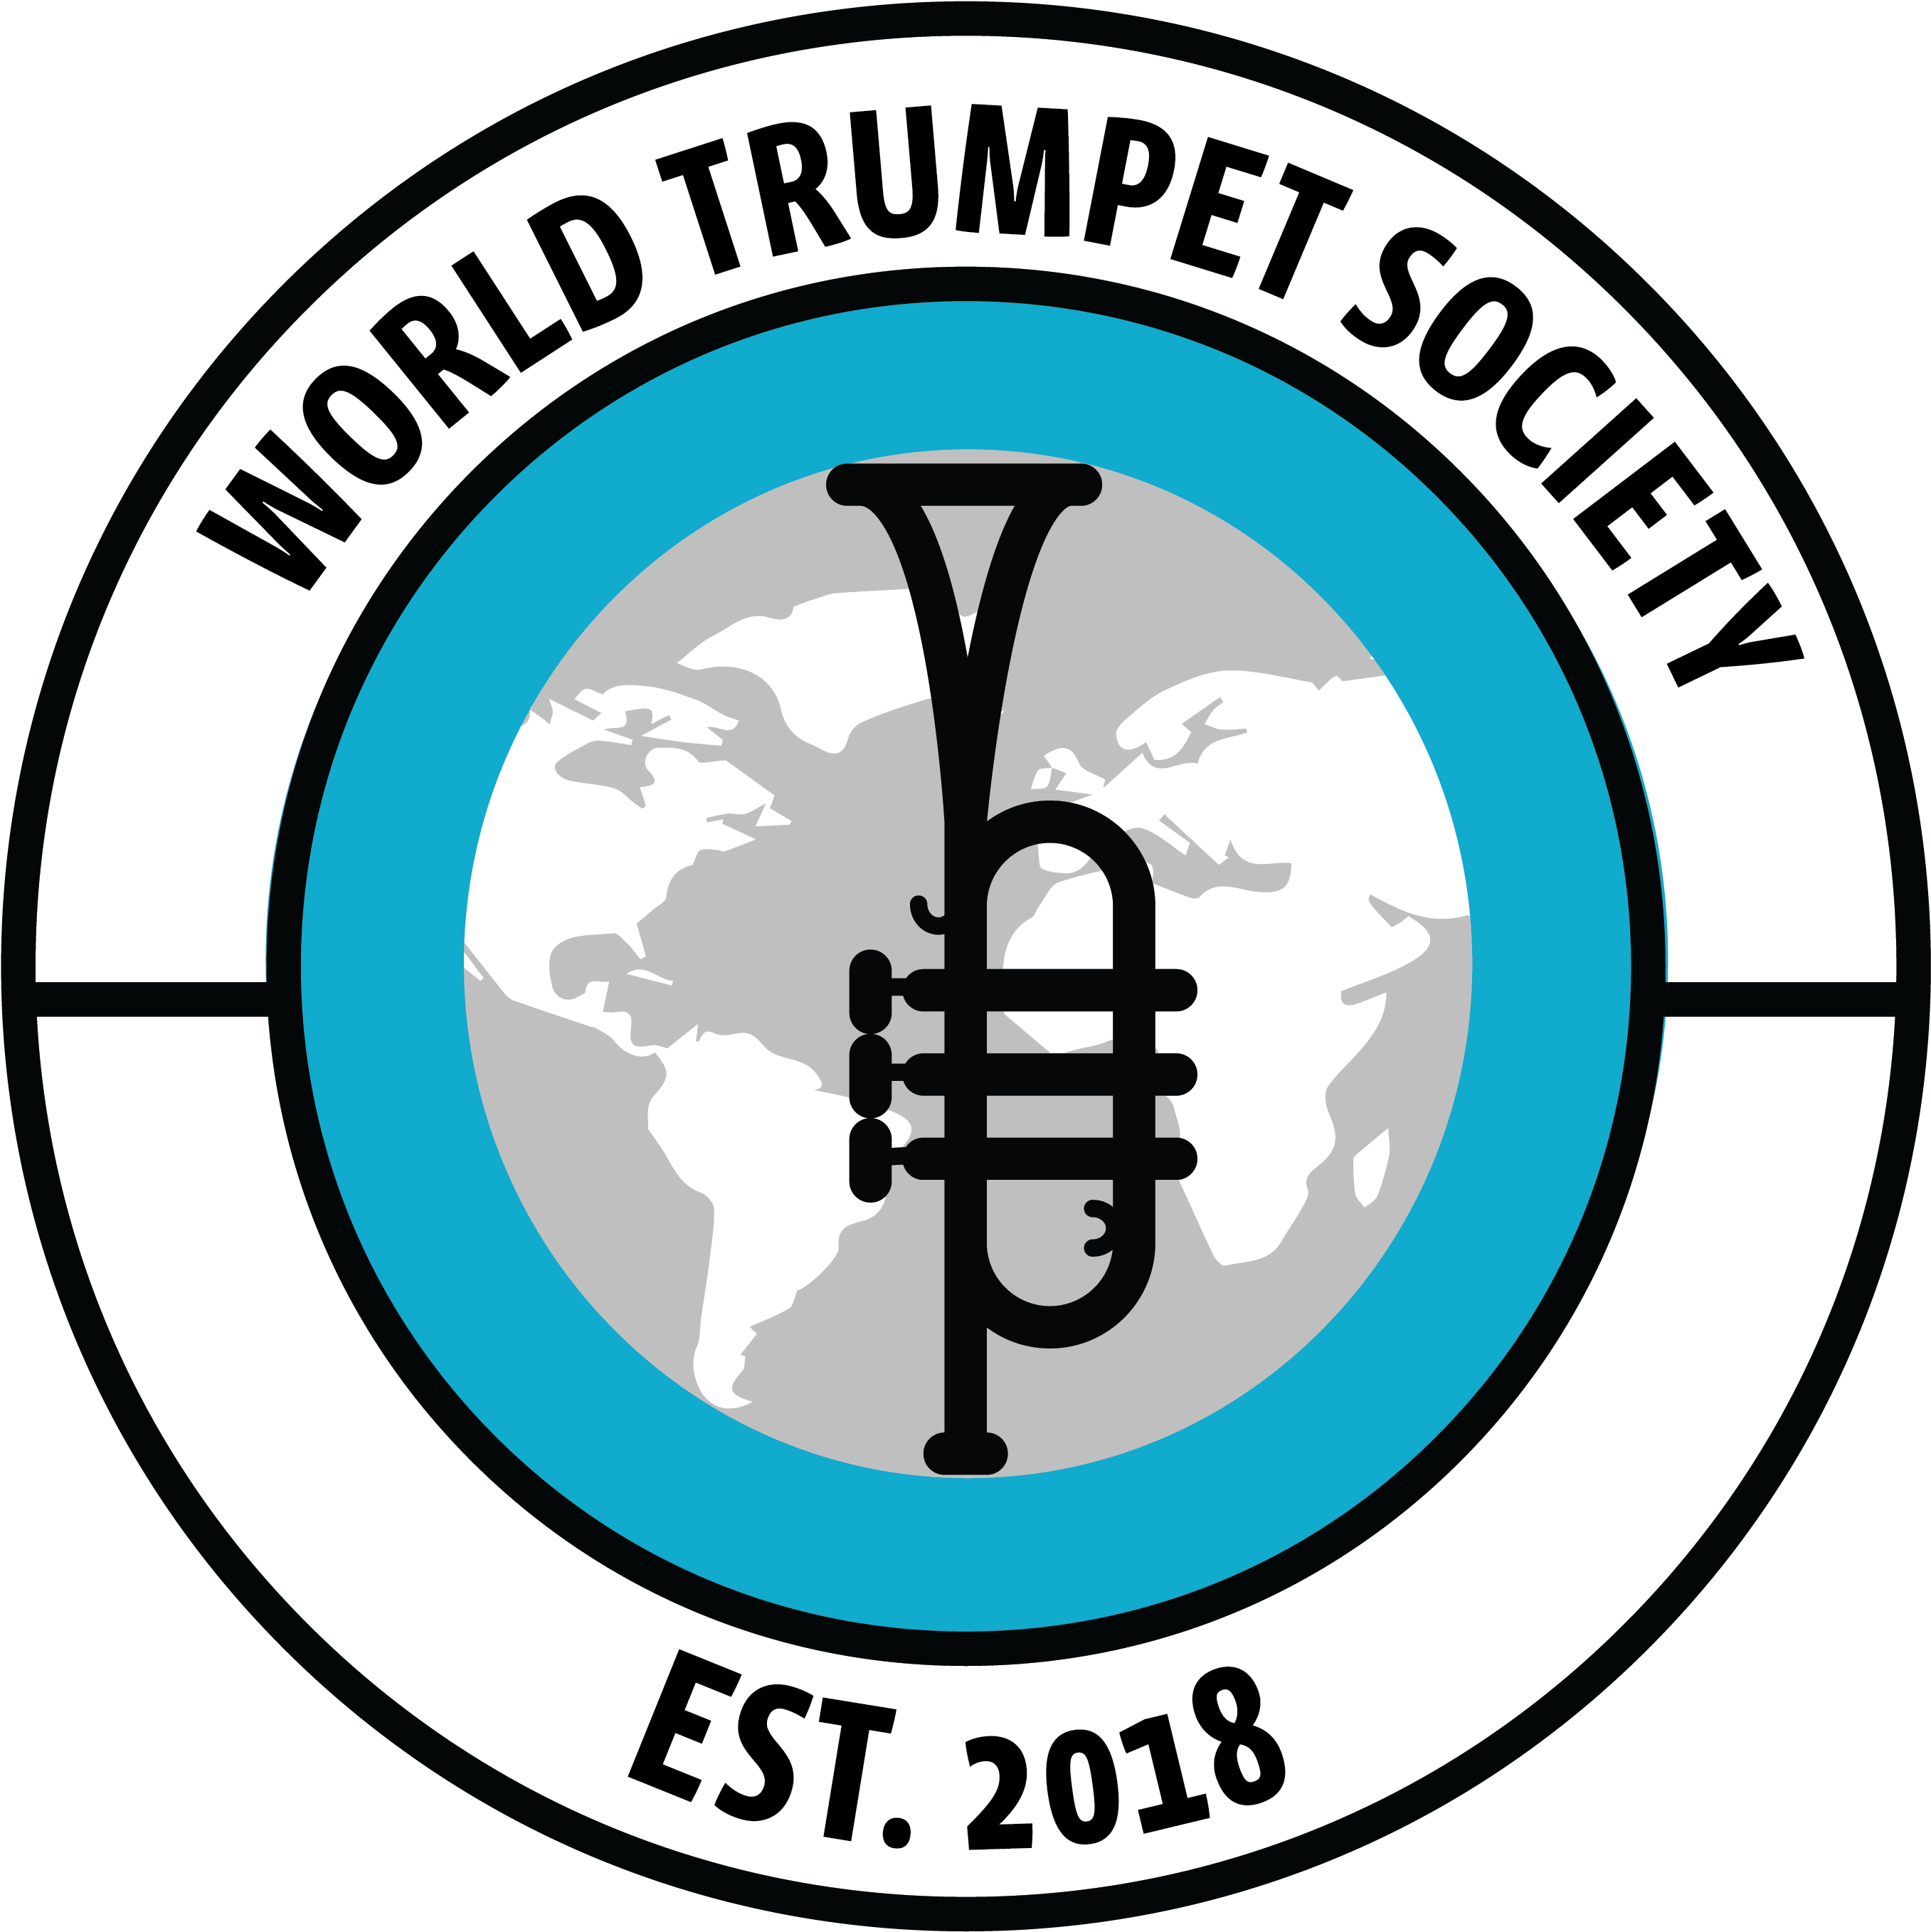 World Trumpet Society - Horizon Observatory (2963x3613)